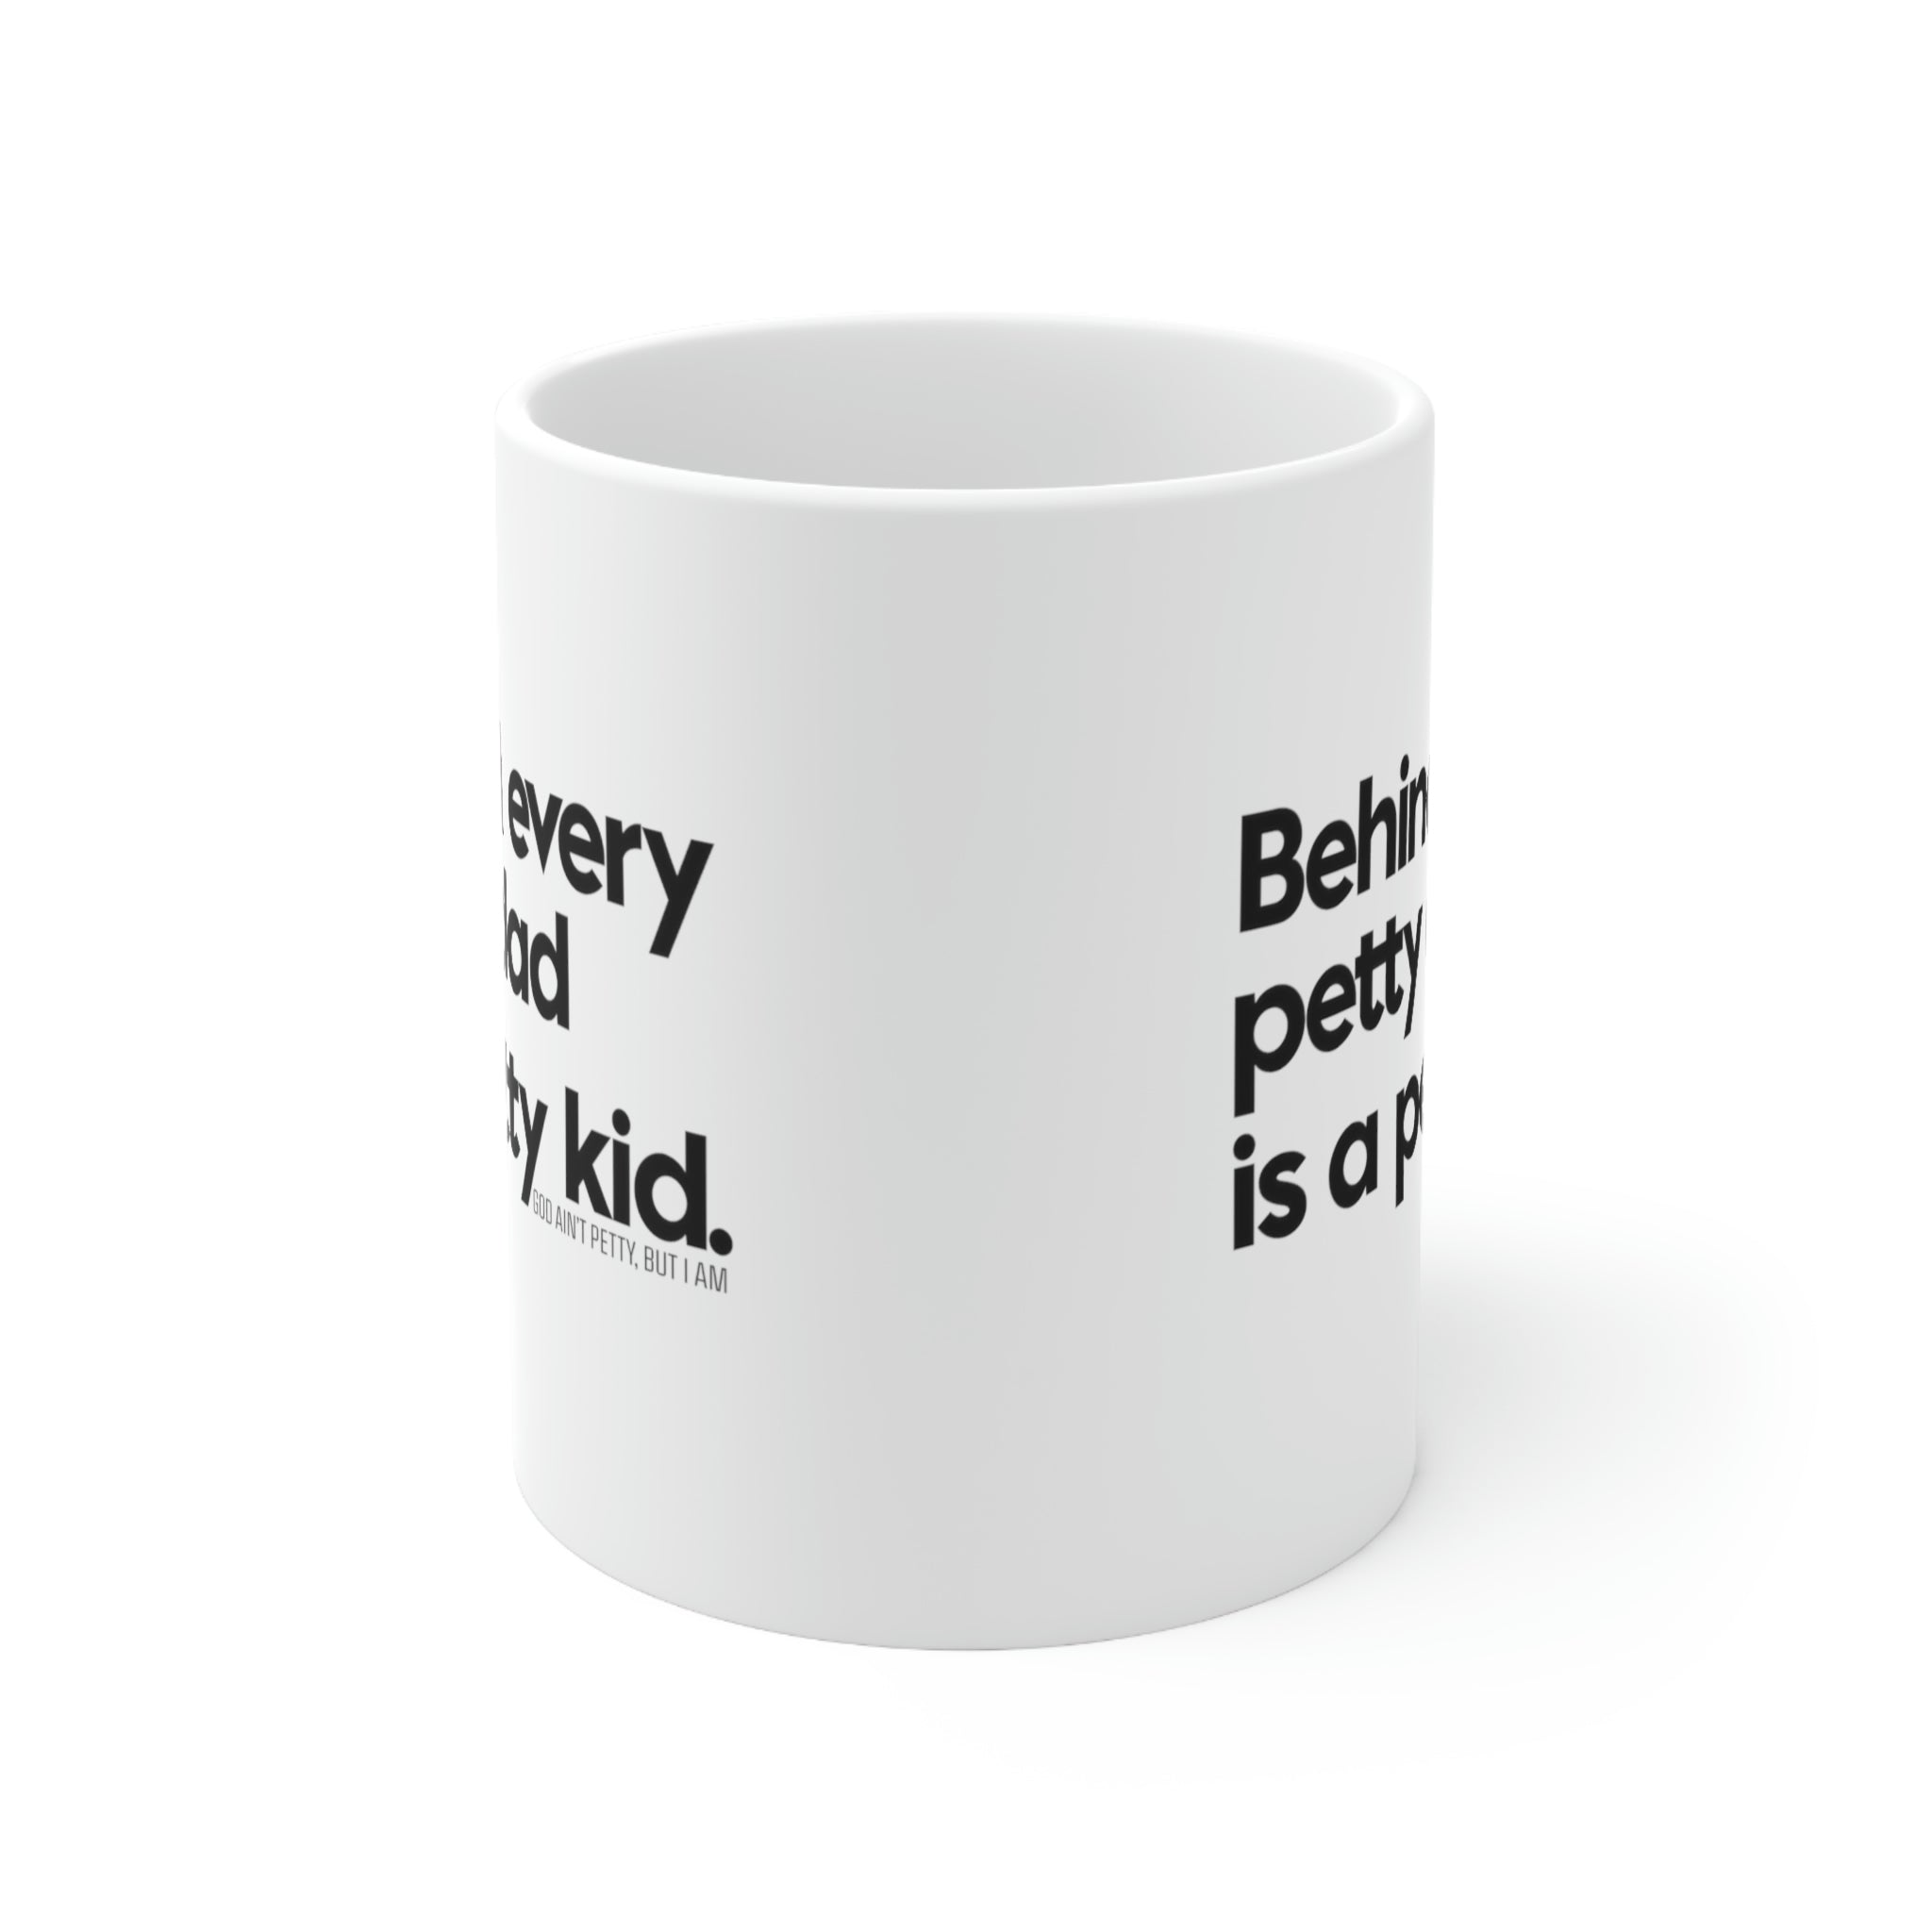 Behind every petty dad is a petty kid Mug 11oz (White/Black)-Mug-The Original God Ain't Petty But I Am